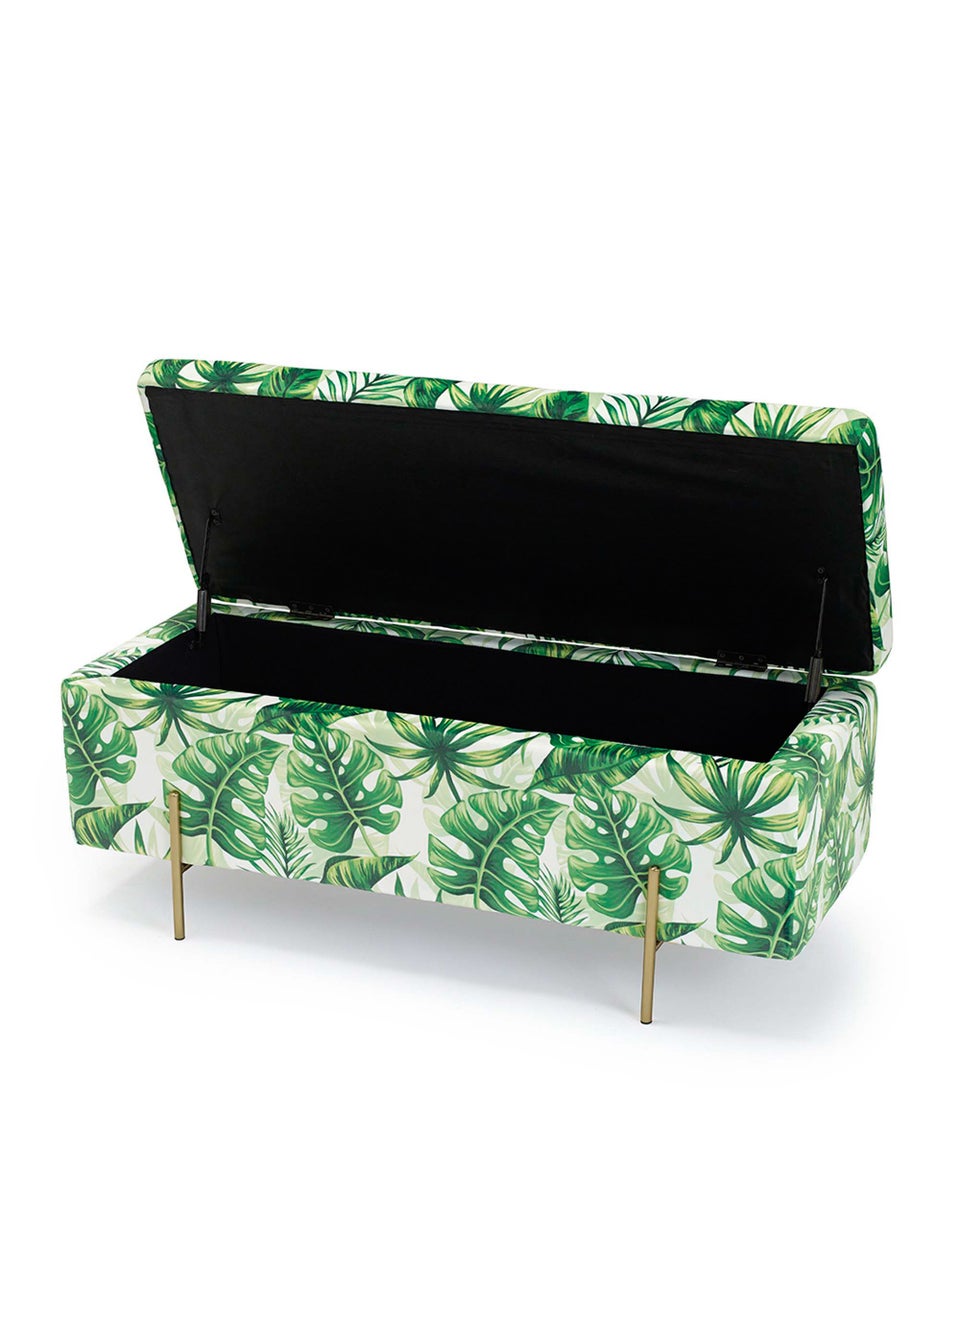 LPD Furniture Lola Storage Ottoman Palm Print (450x1150x450mm)